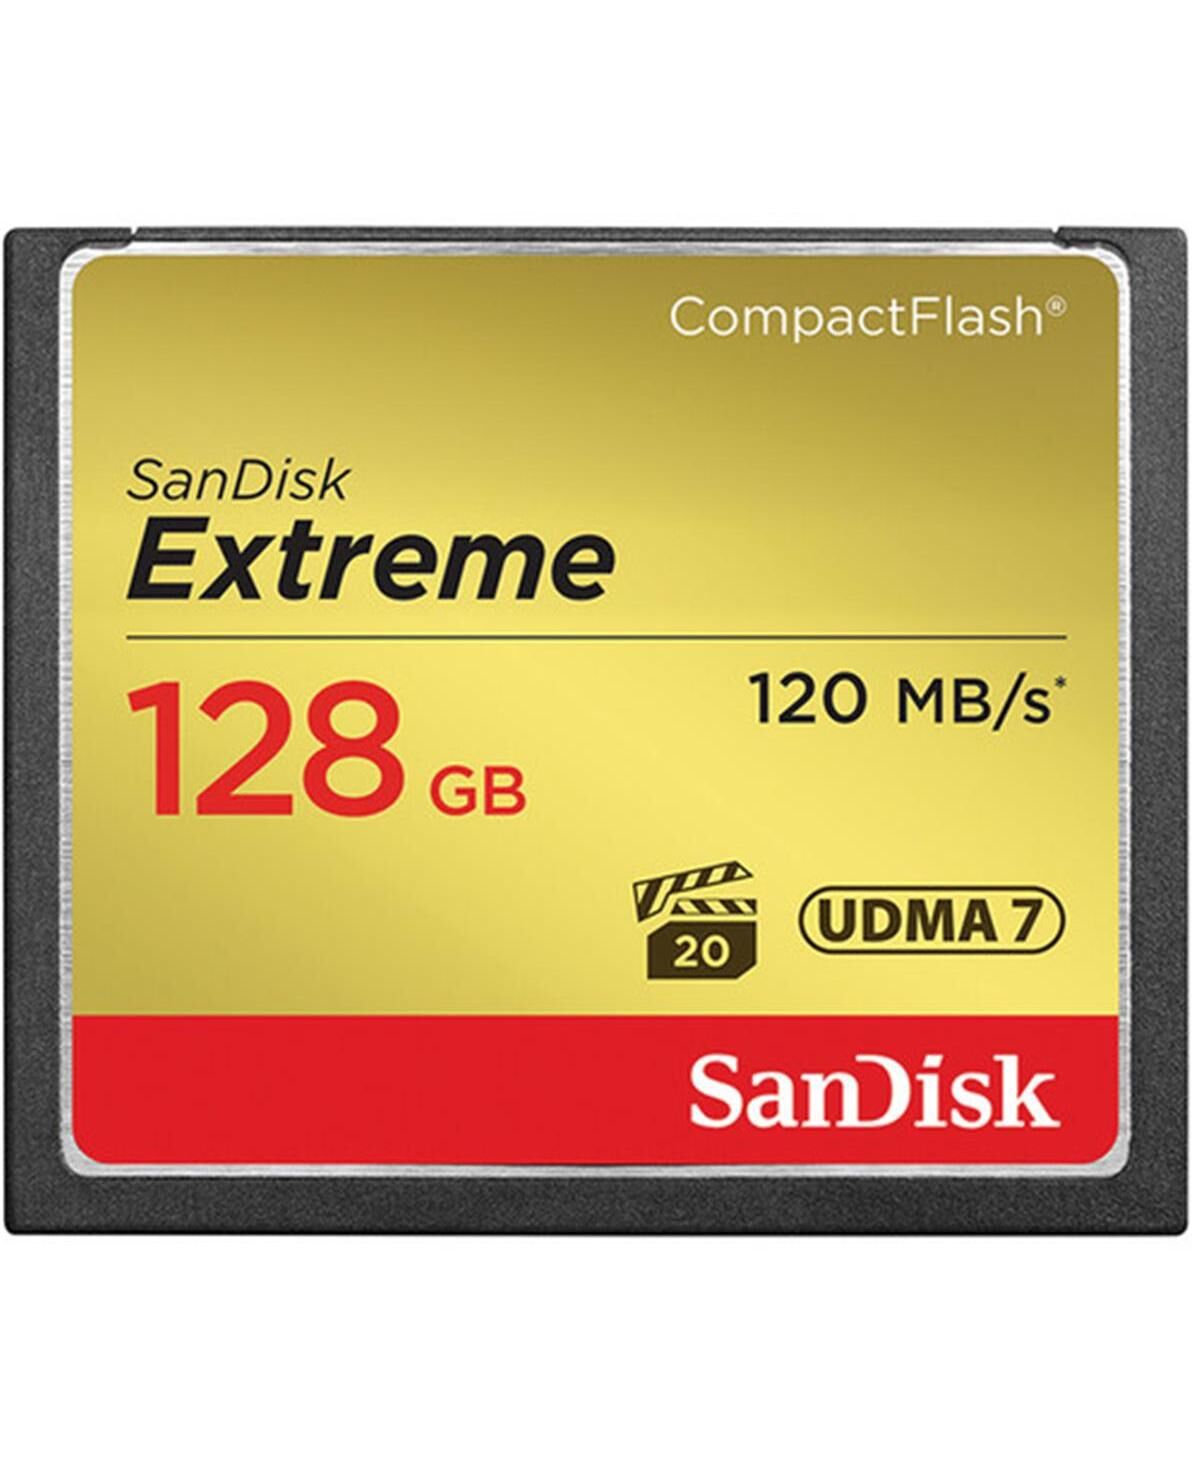 SanDisk Extreme CompactFlash 128GB - White